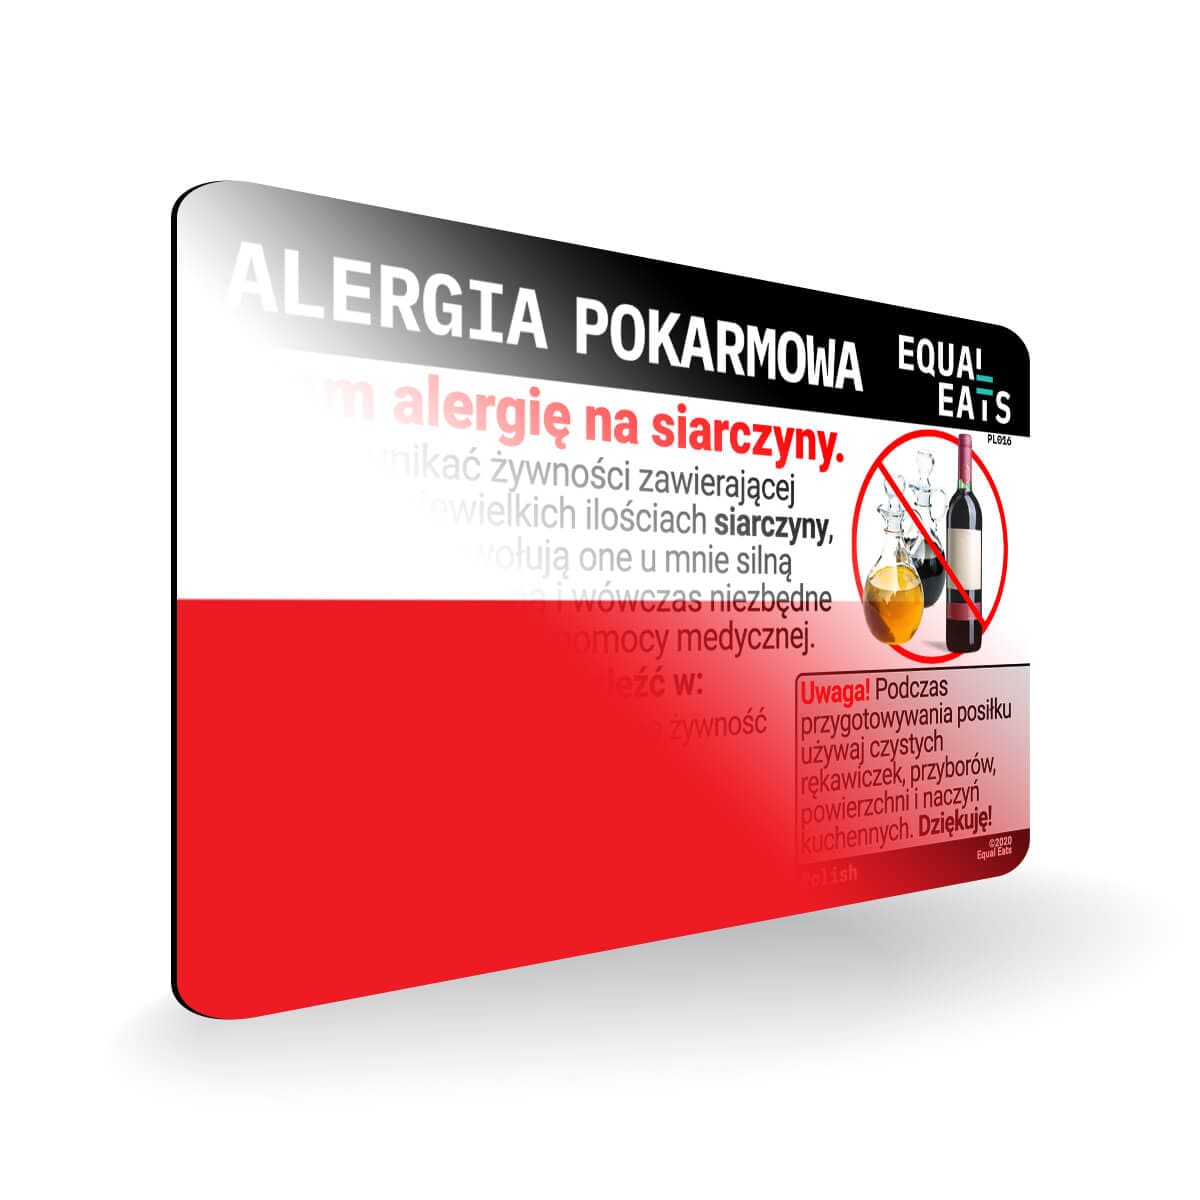 Sulfite Allergy in Polish. Sulfite Allergy Card for Poland